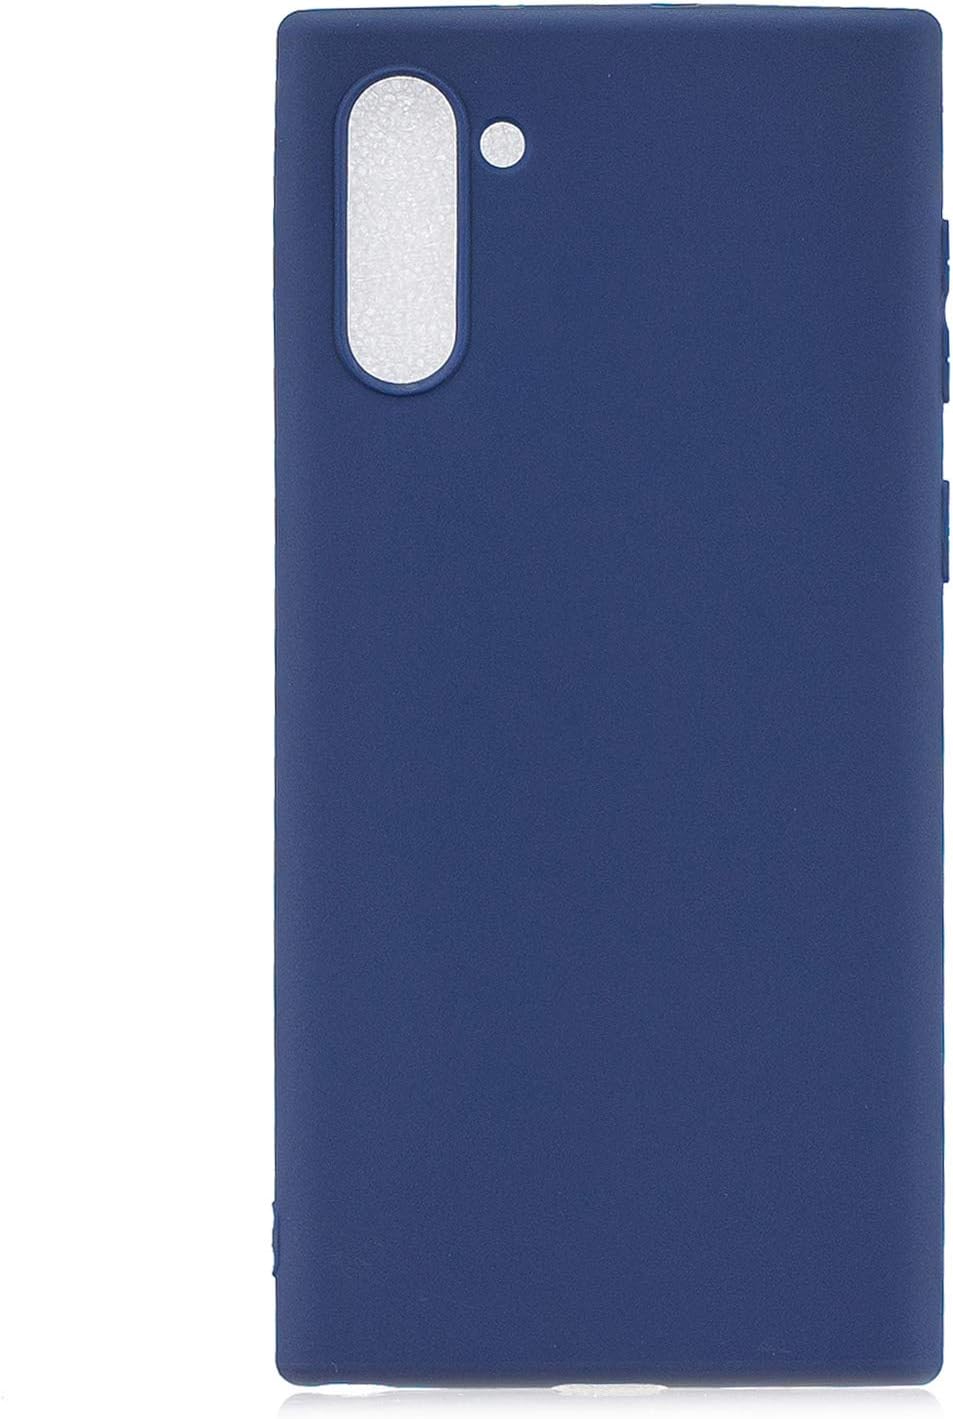 Deidentified Samsung Galaxy Note 10 Dark Blue Case RRP 8.99 CLEARANCE XL 6.99